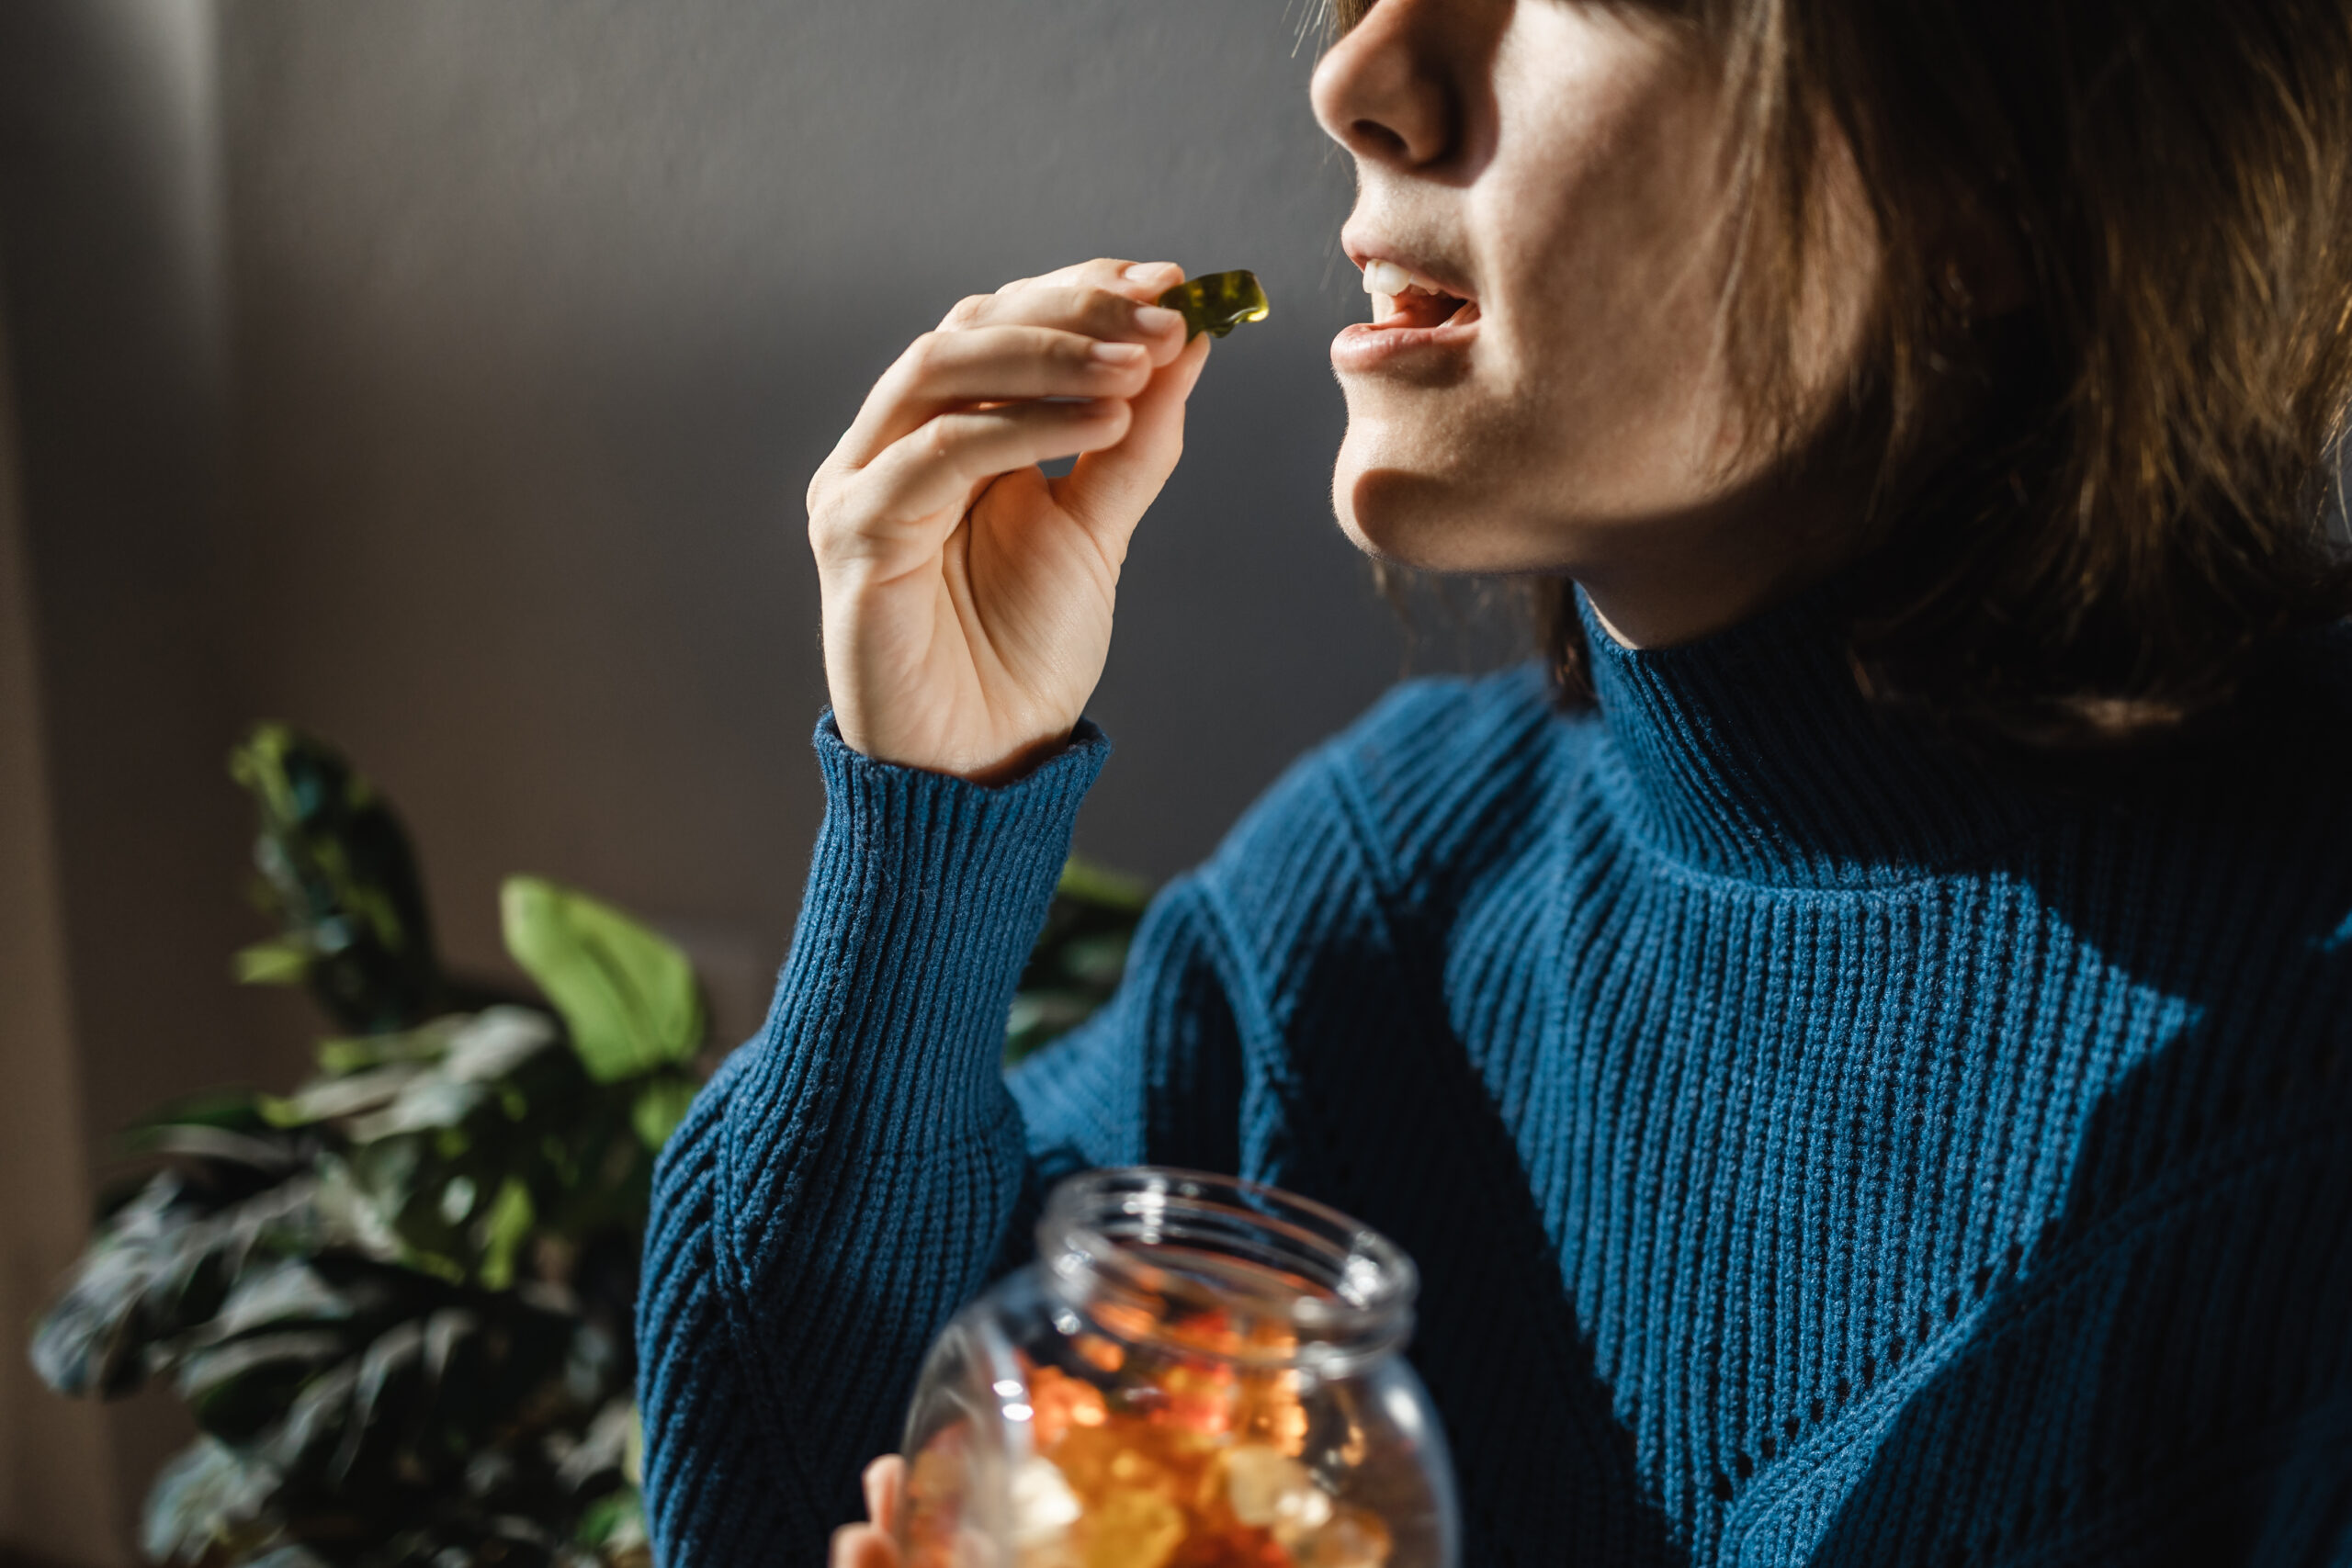 cbd cannabis gummy woman eating edible weed swee 2022 01 30 07 15 05 utc scaled